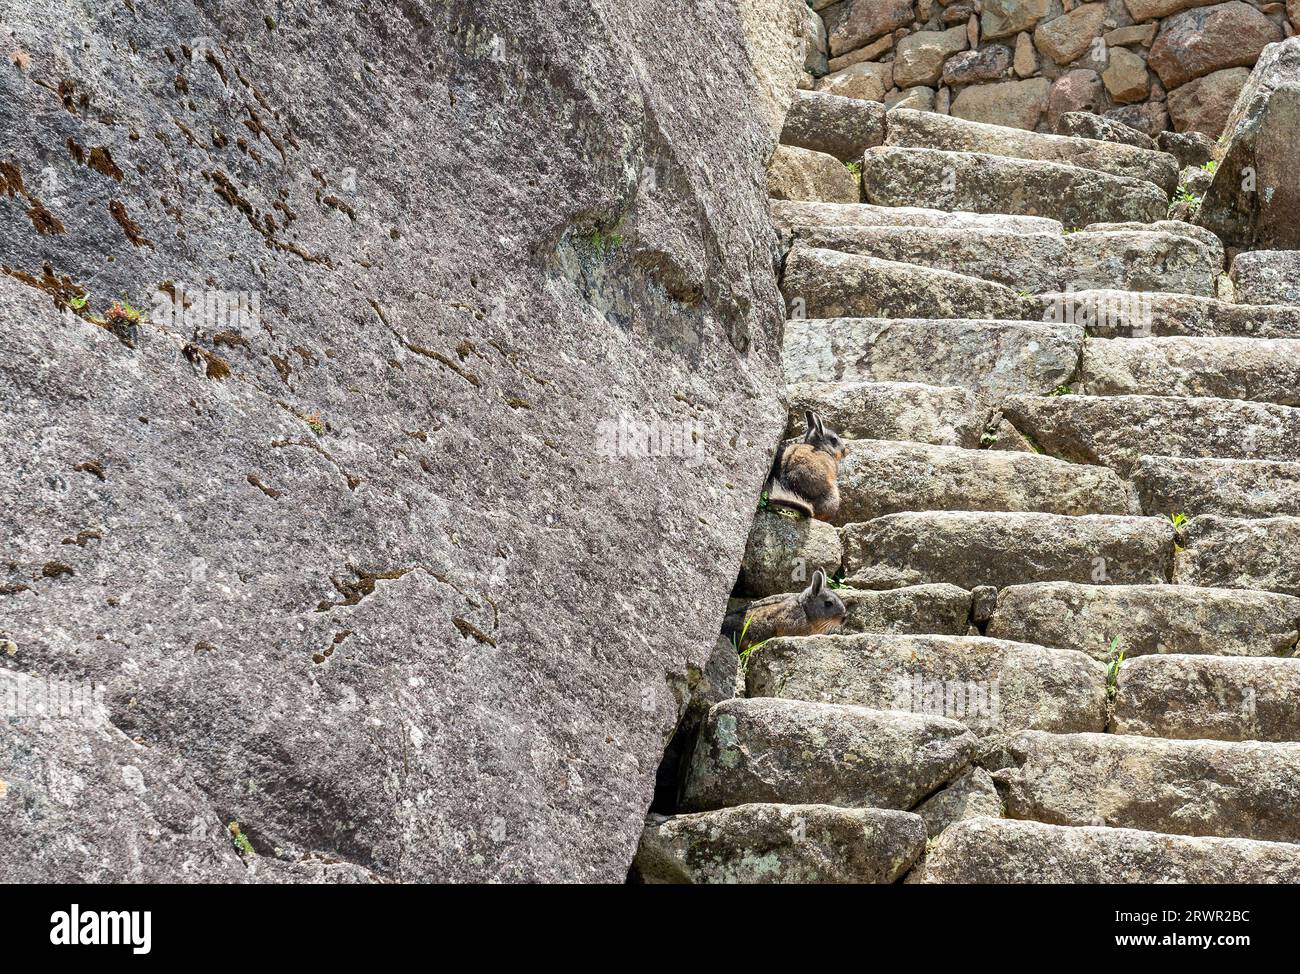 Vizcacha or Viscacha (Lagidium peruanum) on steps in Machu Picchu, Peru. Stock Photo